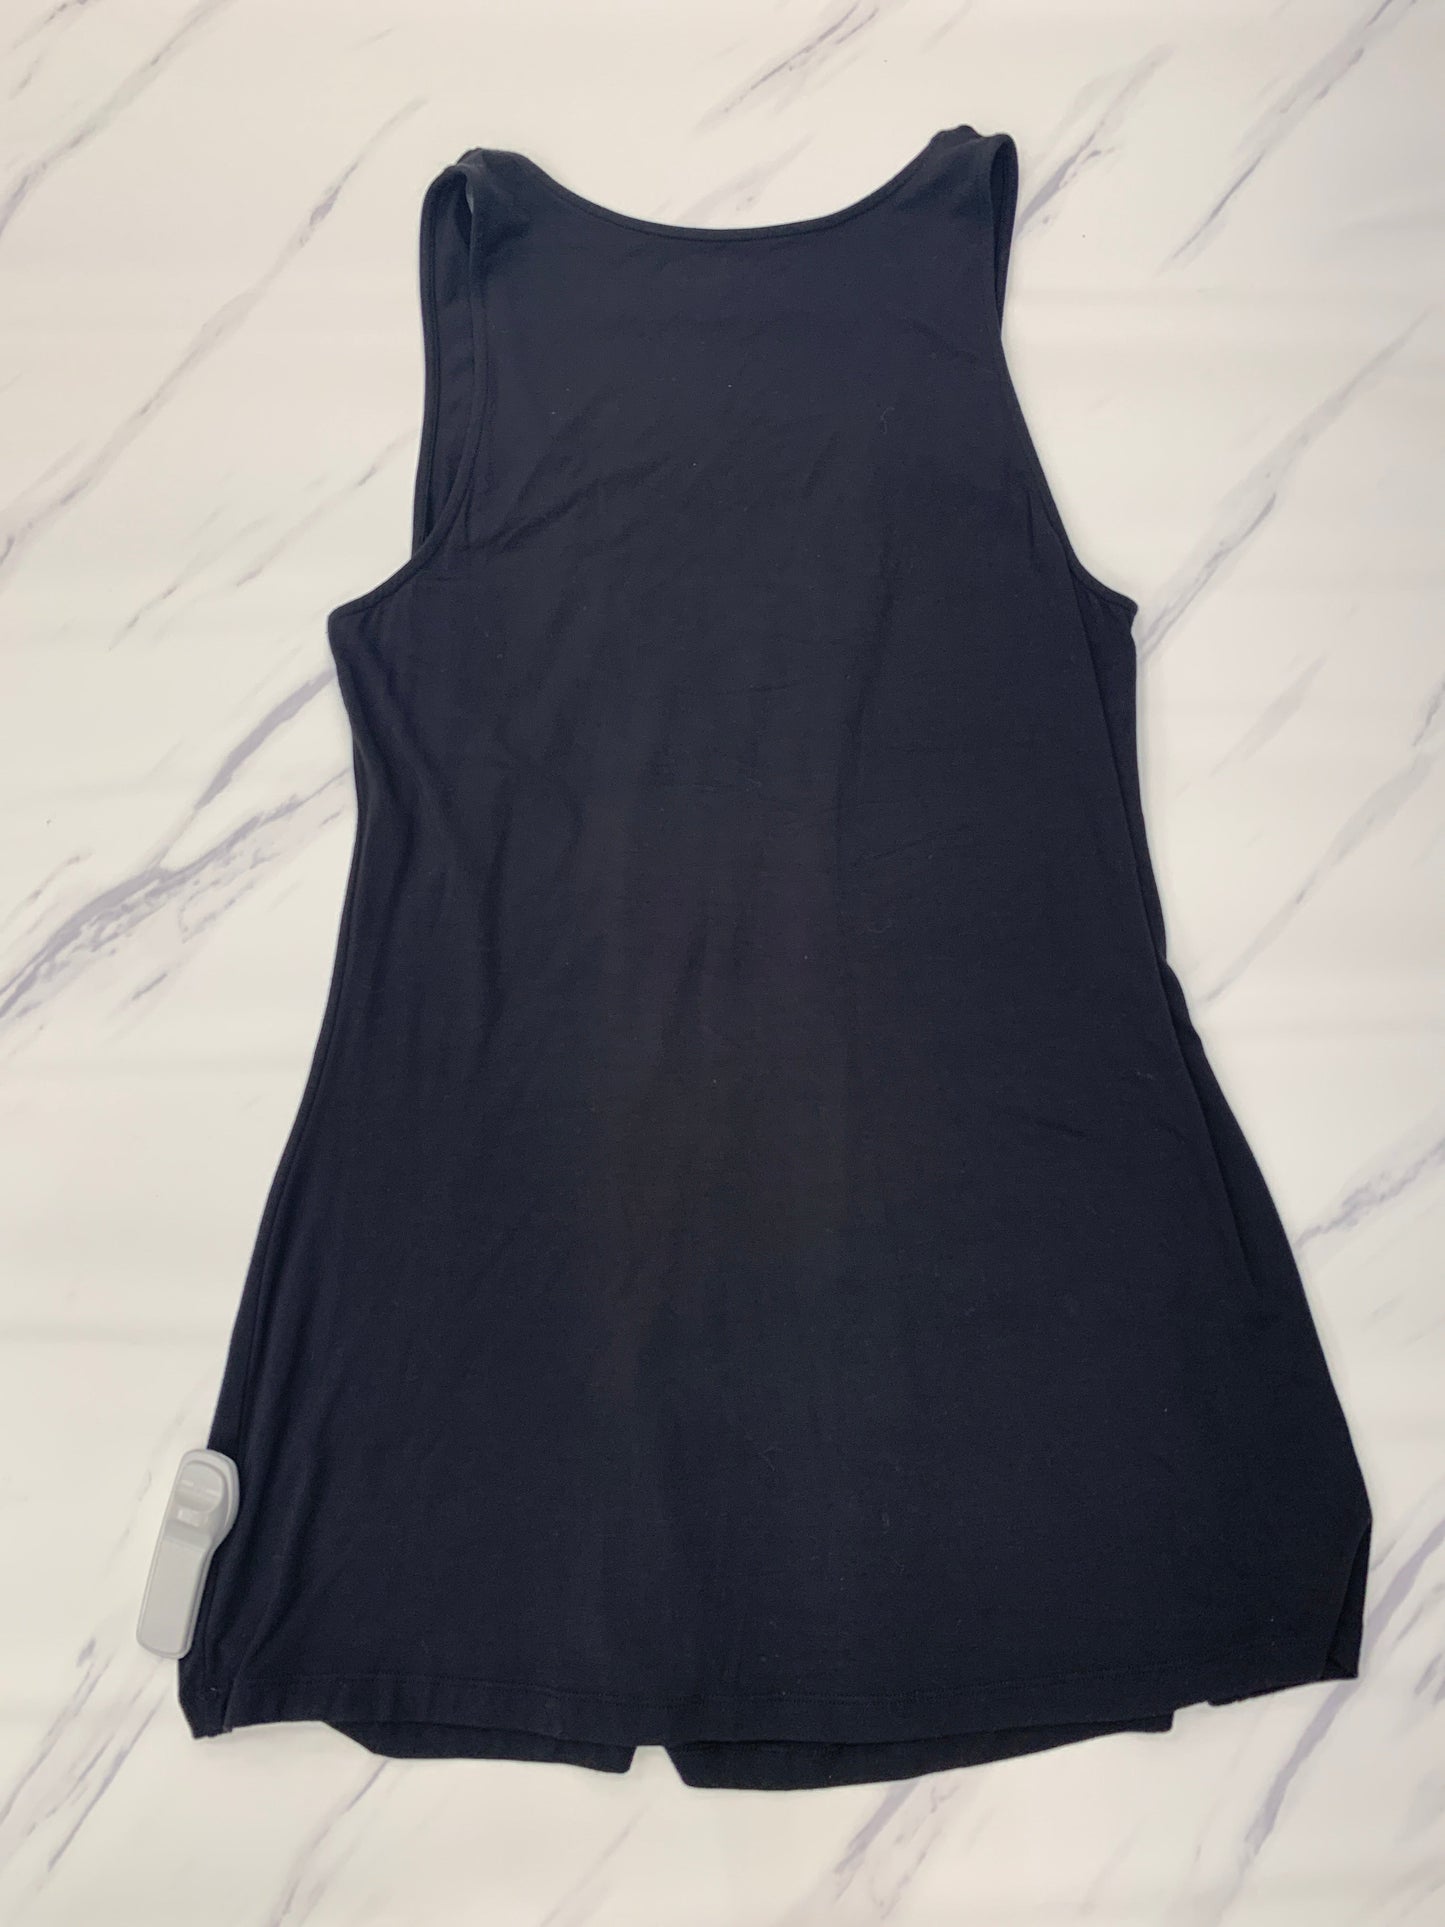 Black Top Sleeveless Designer Soft Surroundings, Size M